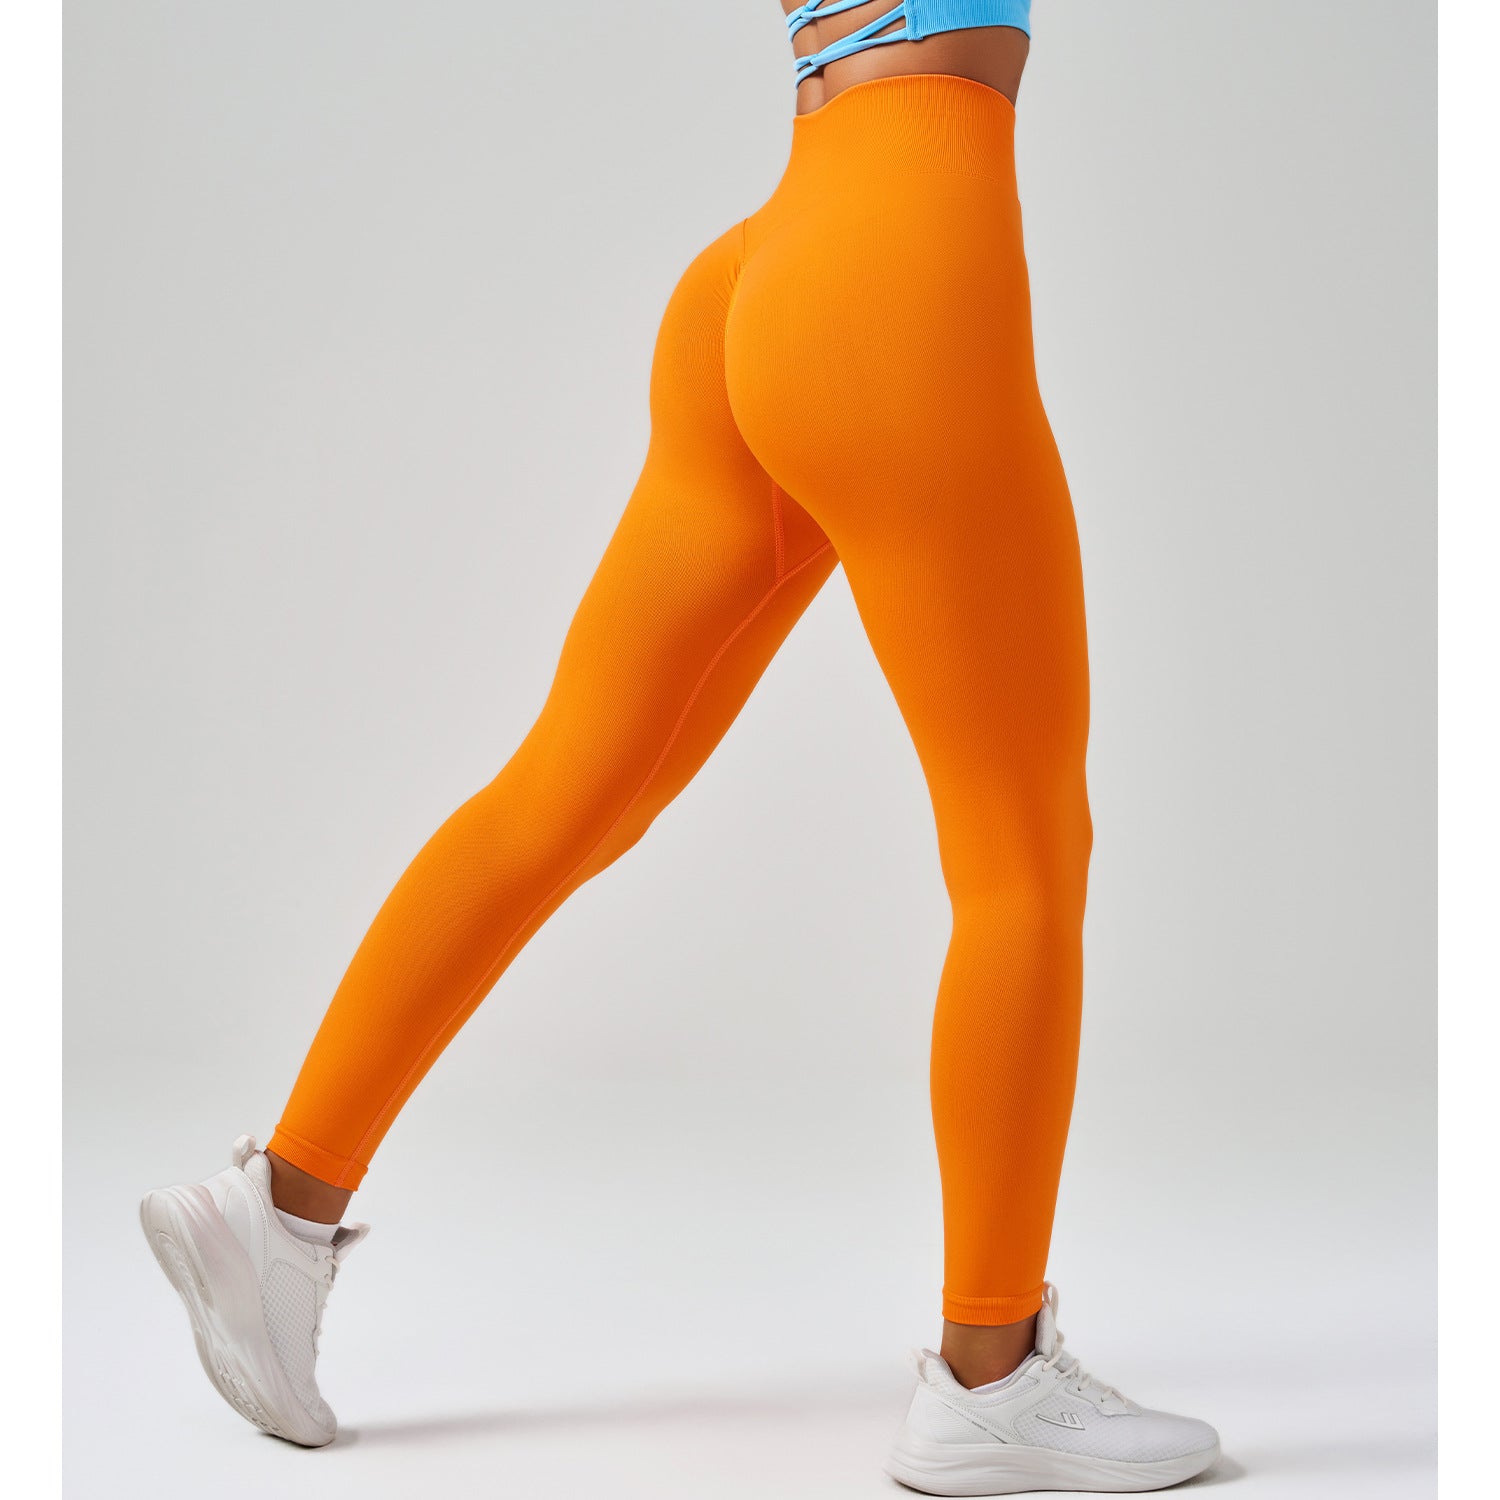 Women's Wholesale High Waist Fitness Pants